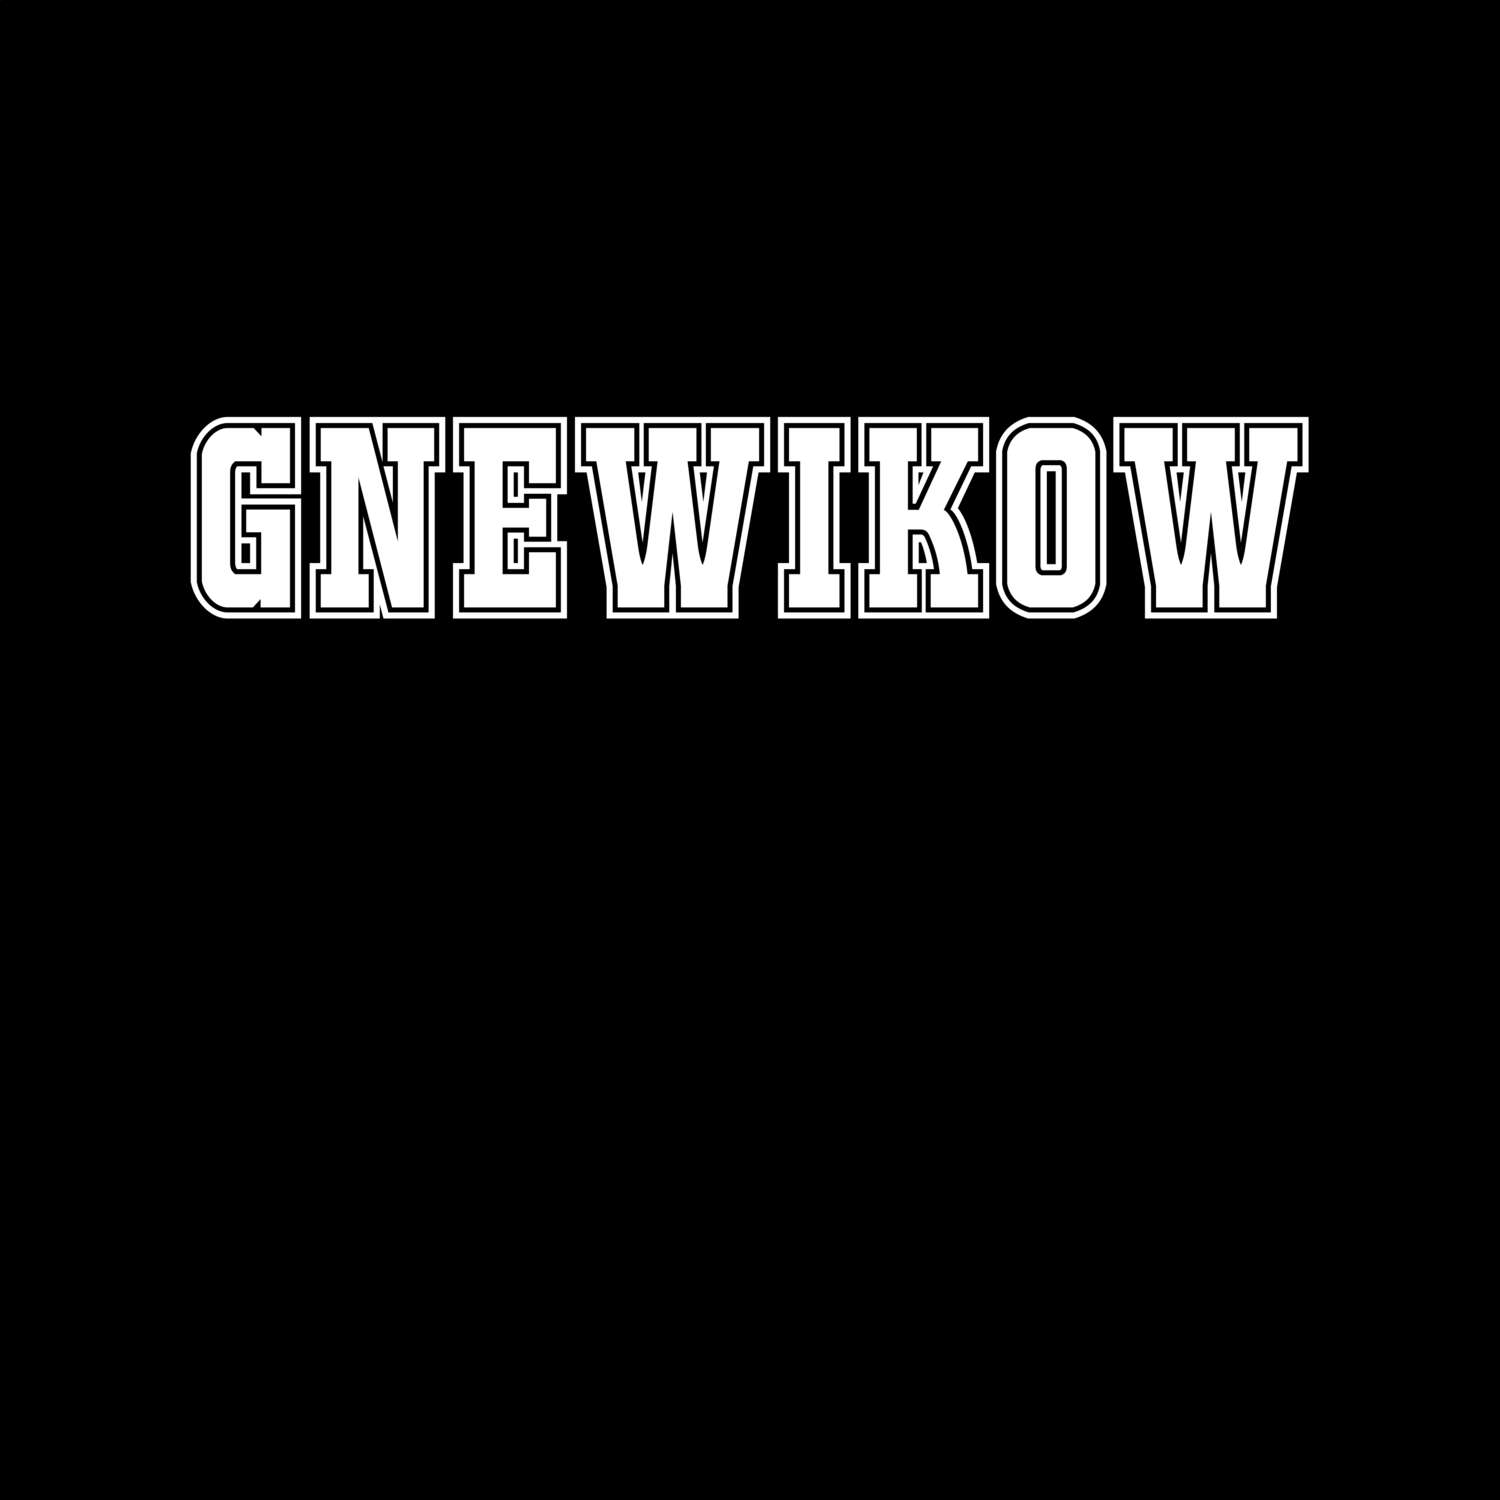 Gnewikow T-Shirt »Classic«